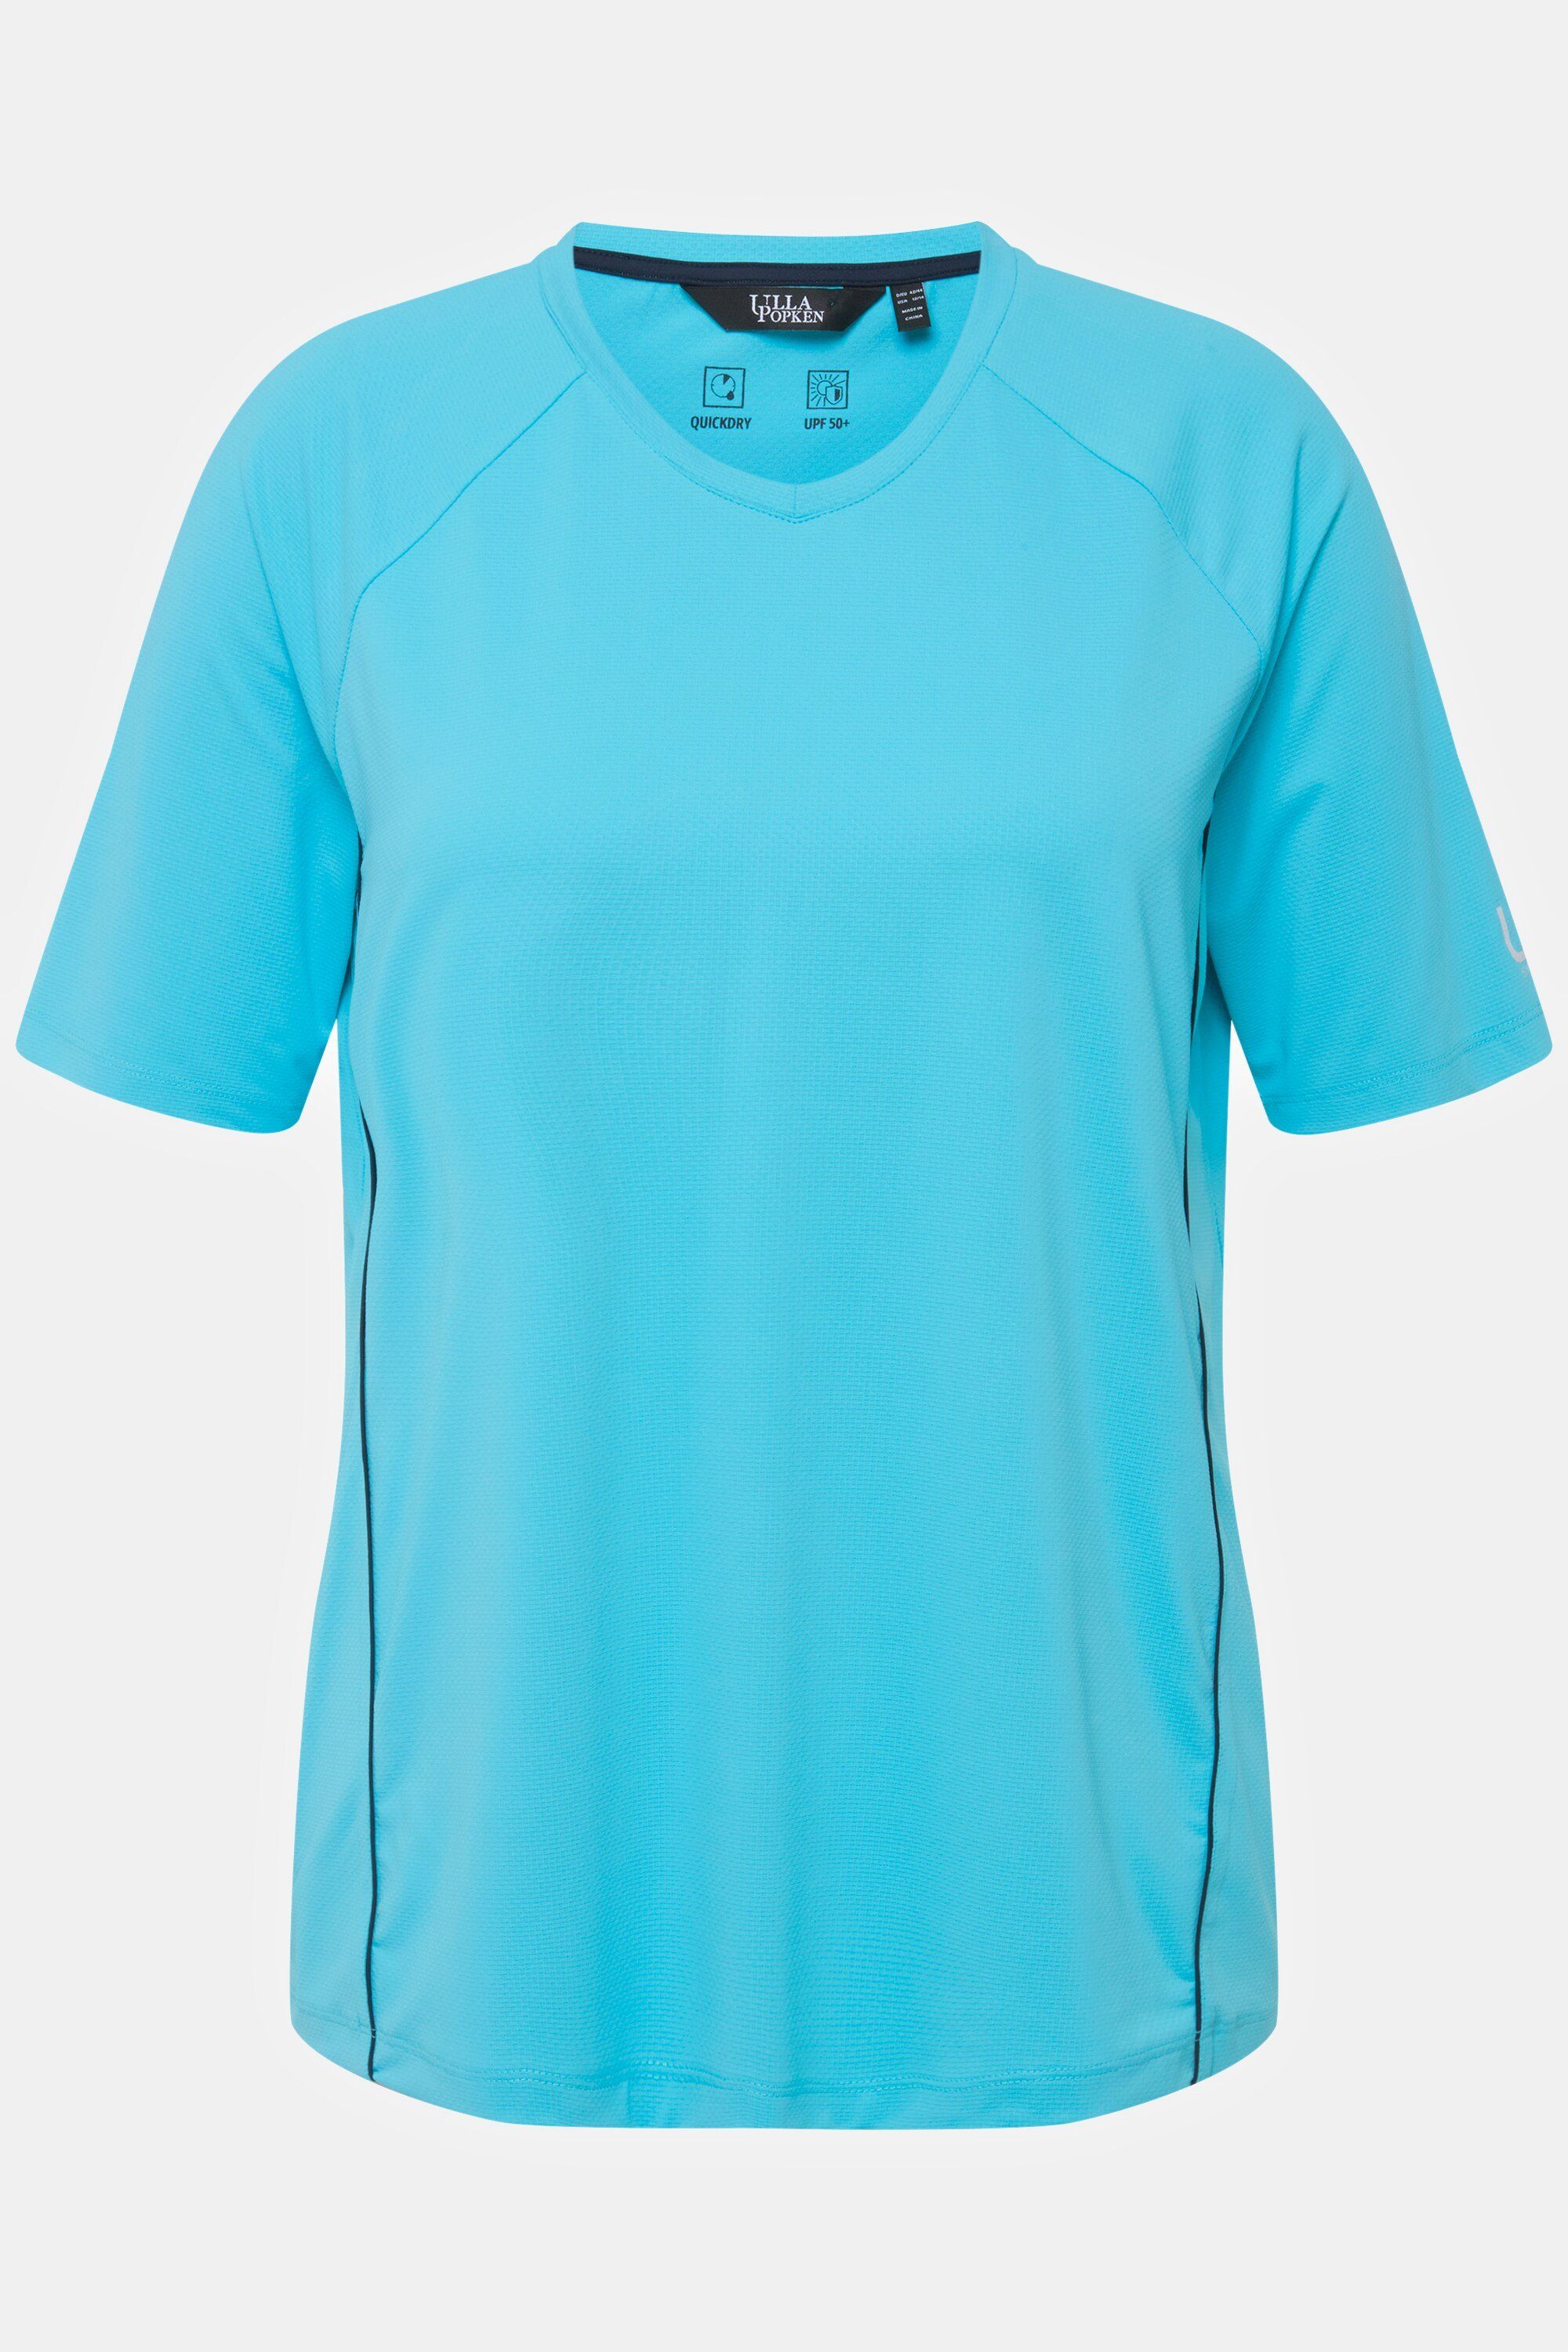 UV-Schutz V-Ausschnitt türkis T-Shirt Popken Rundhalsshirt Halbarm helles Ulla 50+